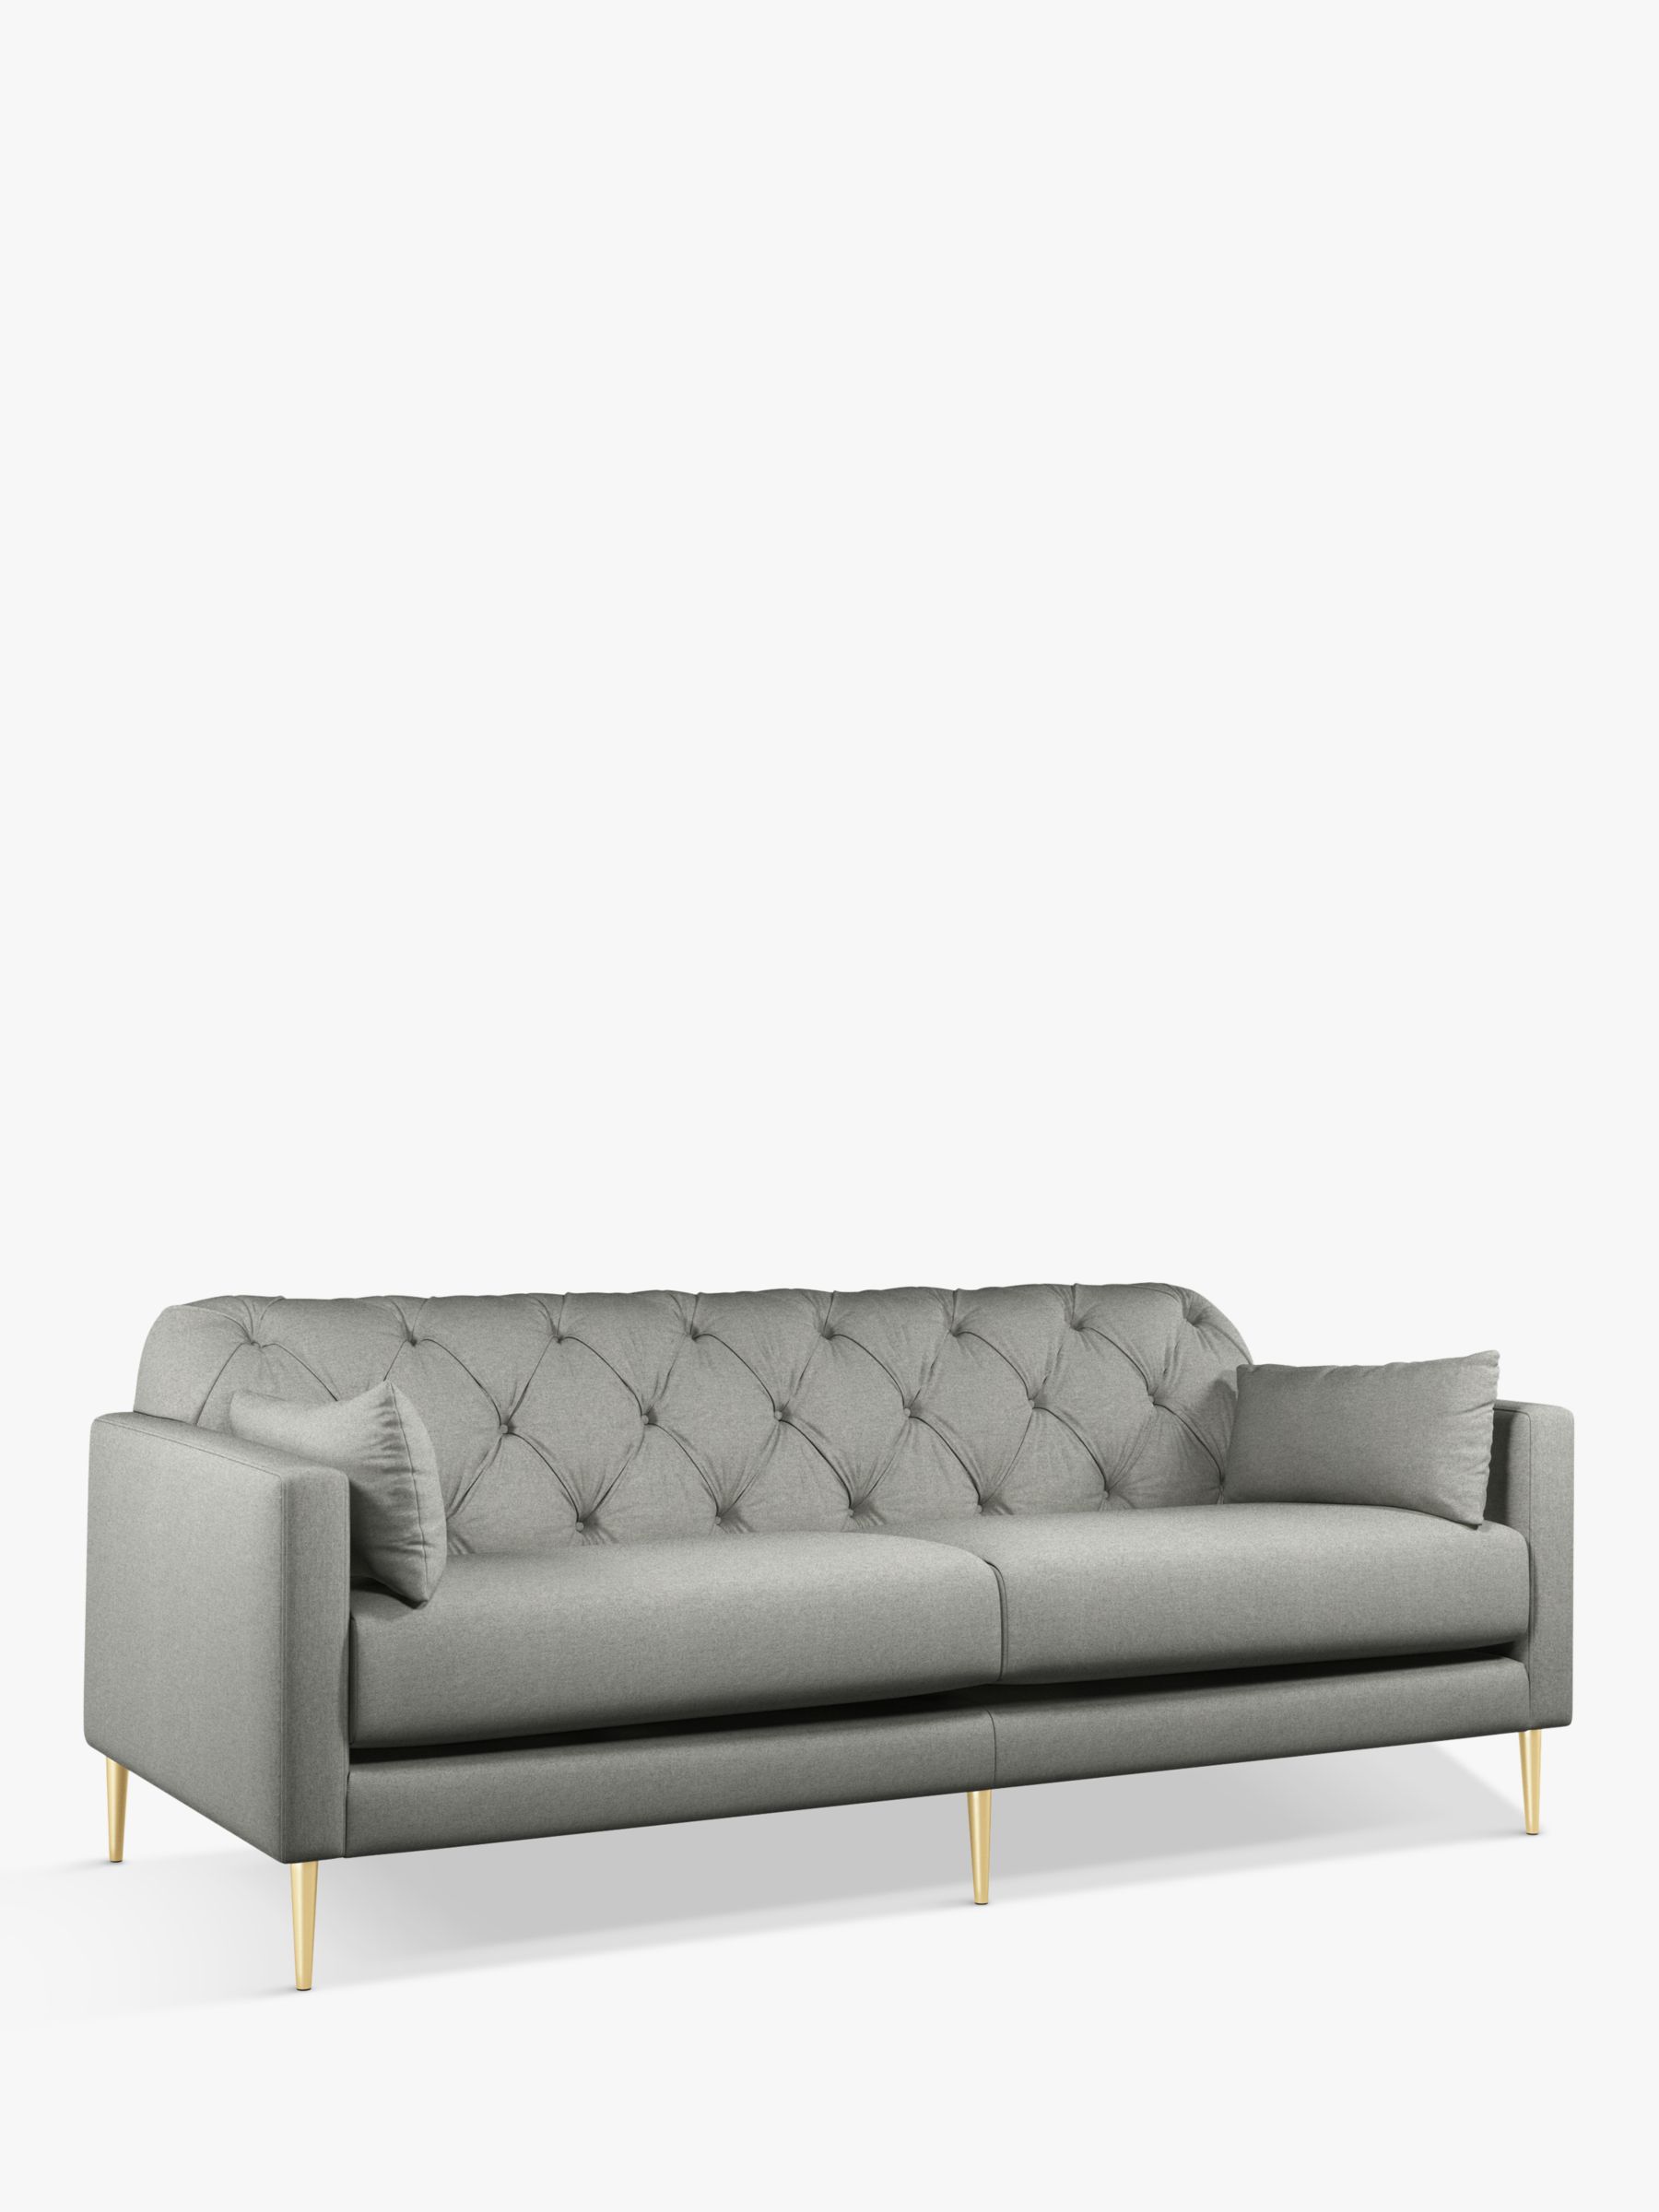 Mendel Range, Swoon Mendel Large 3 Seater Sofa, Gold Leg, Grey Cotton